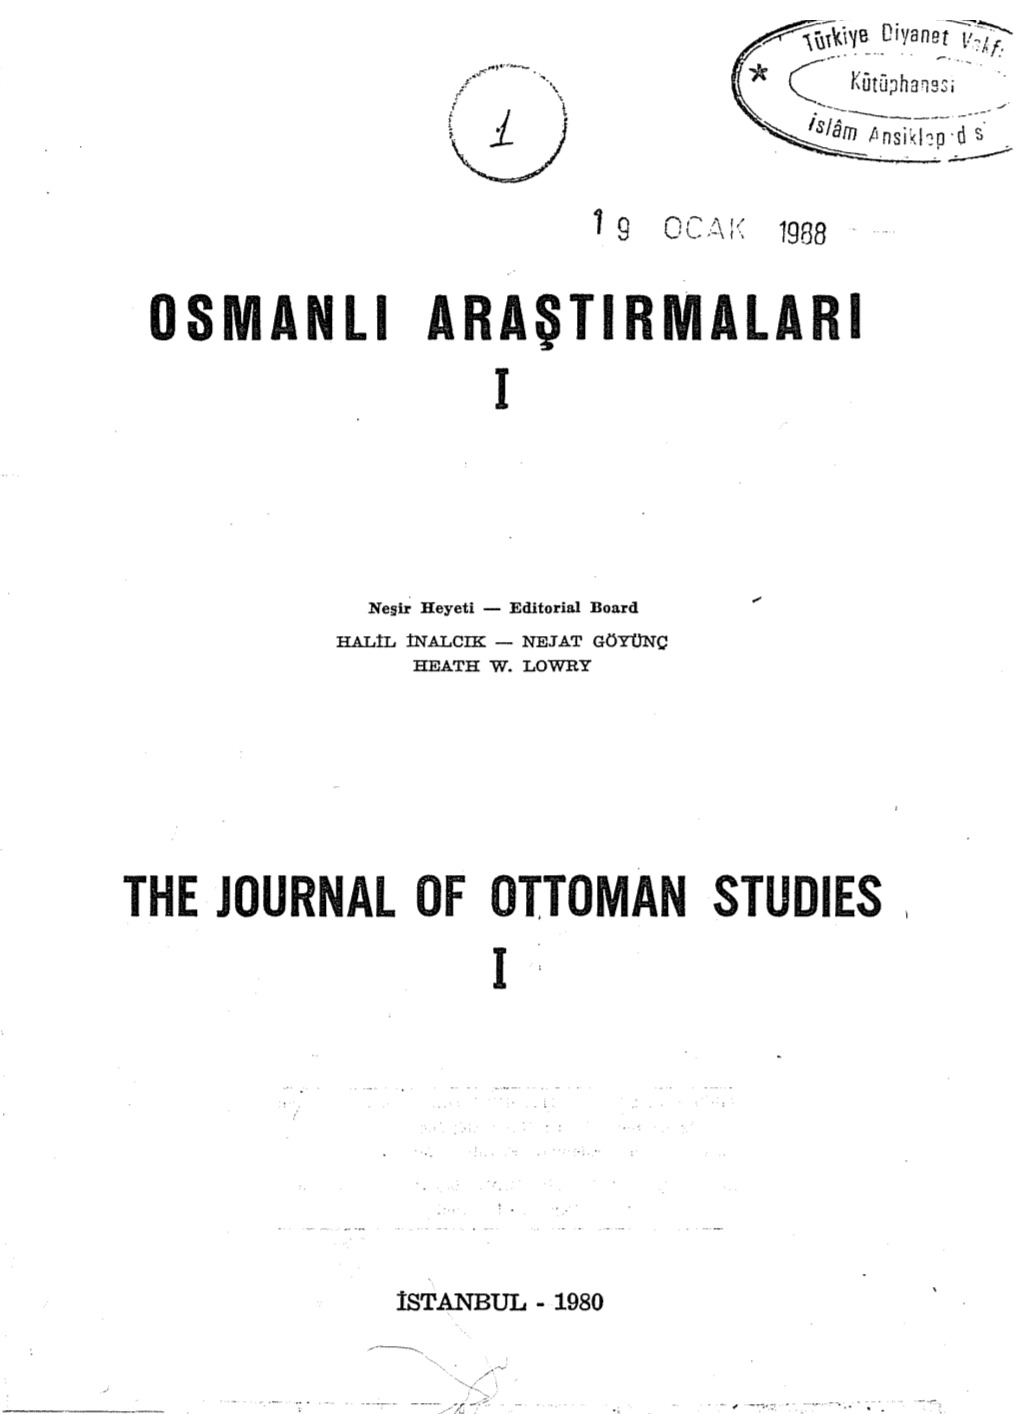 I the Journal of Ottoman Studies